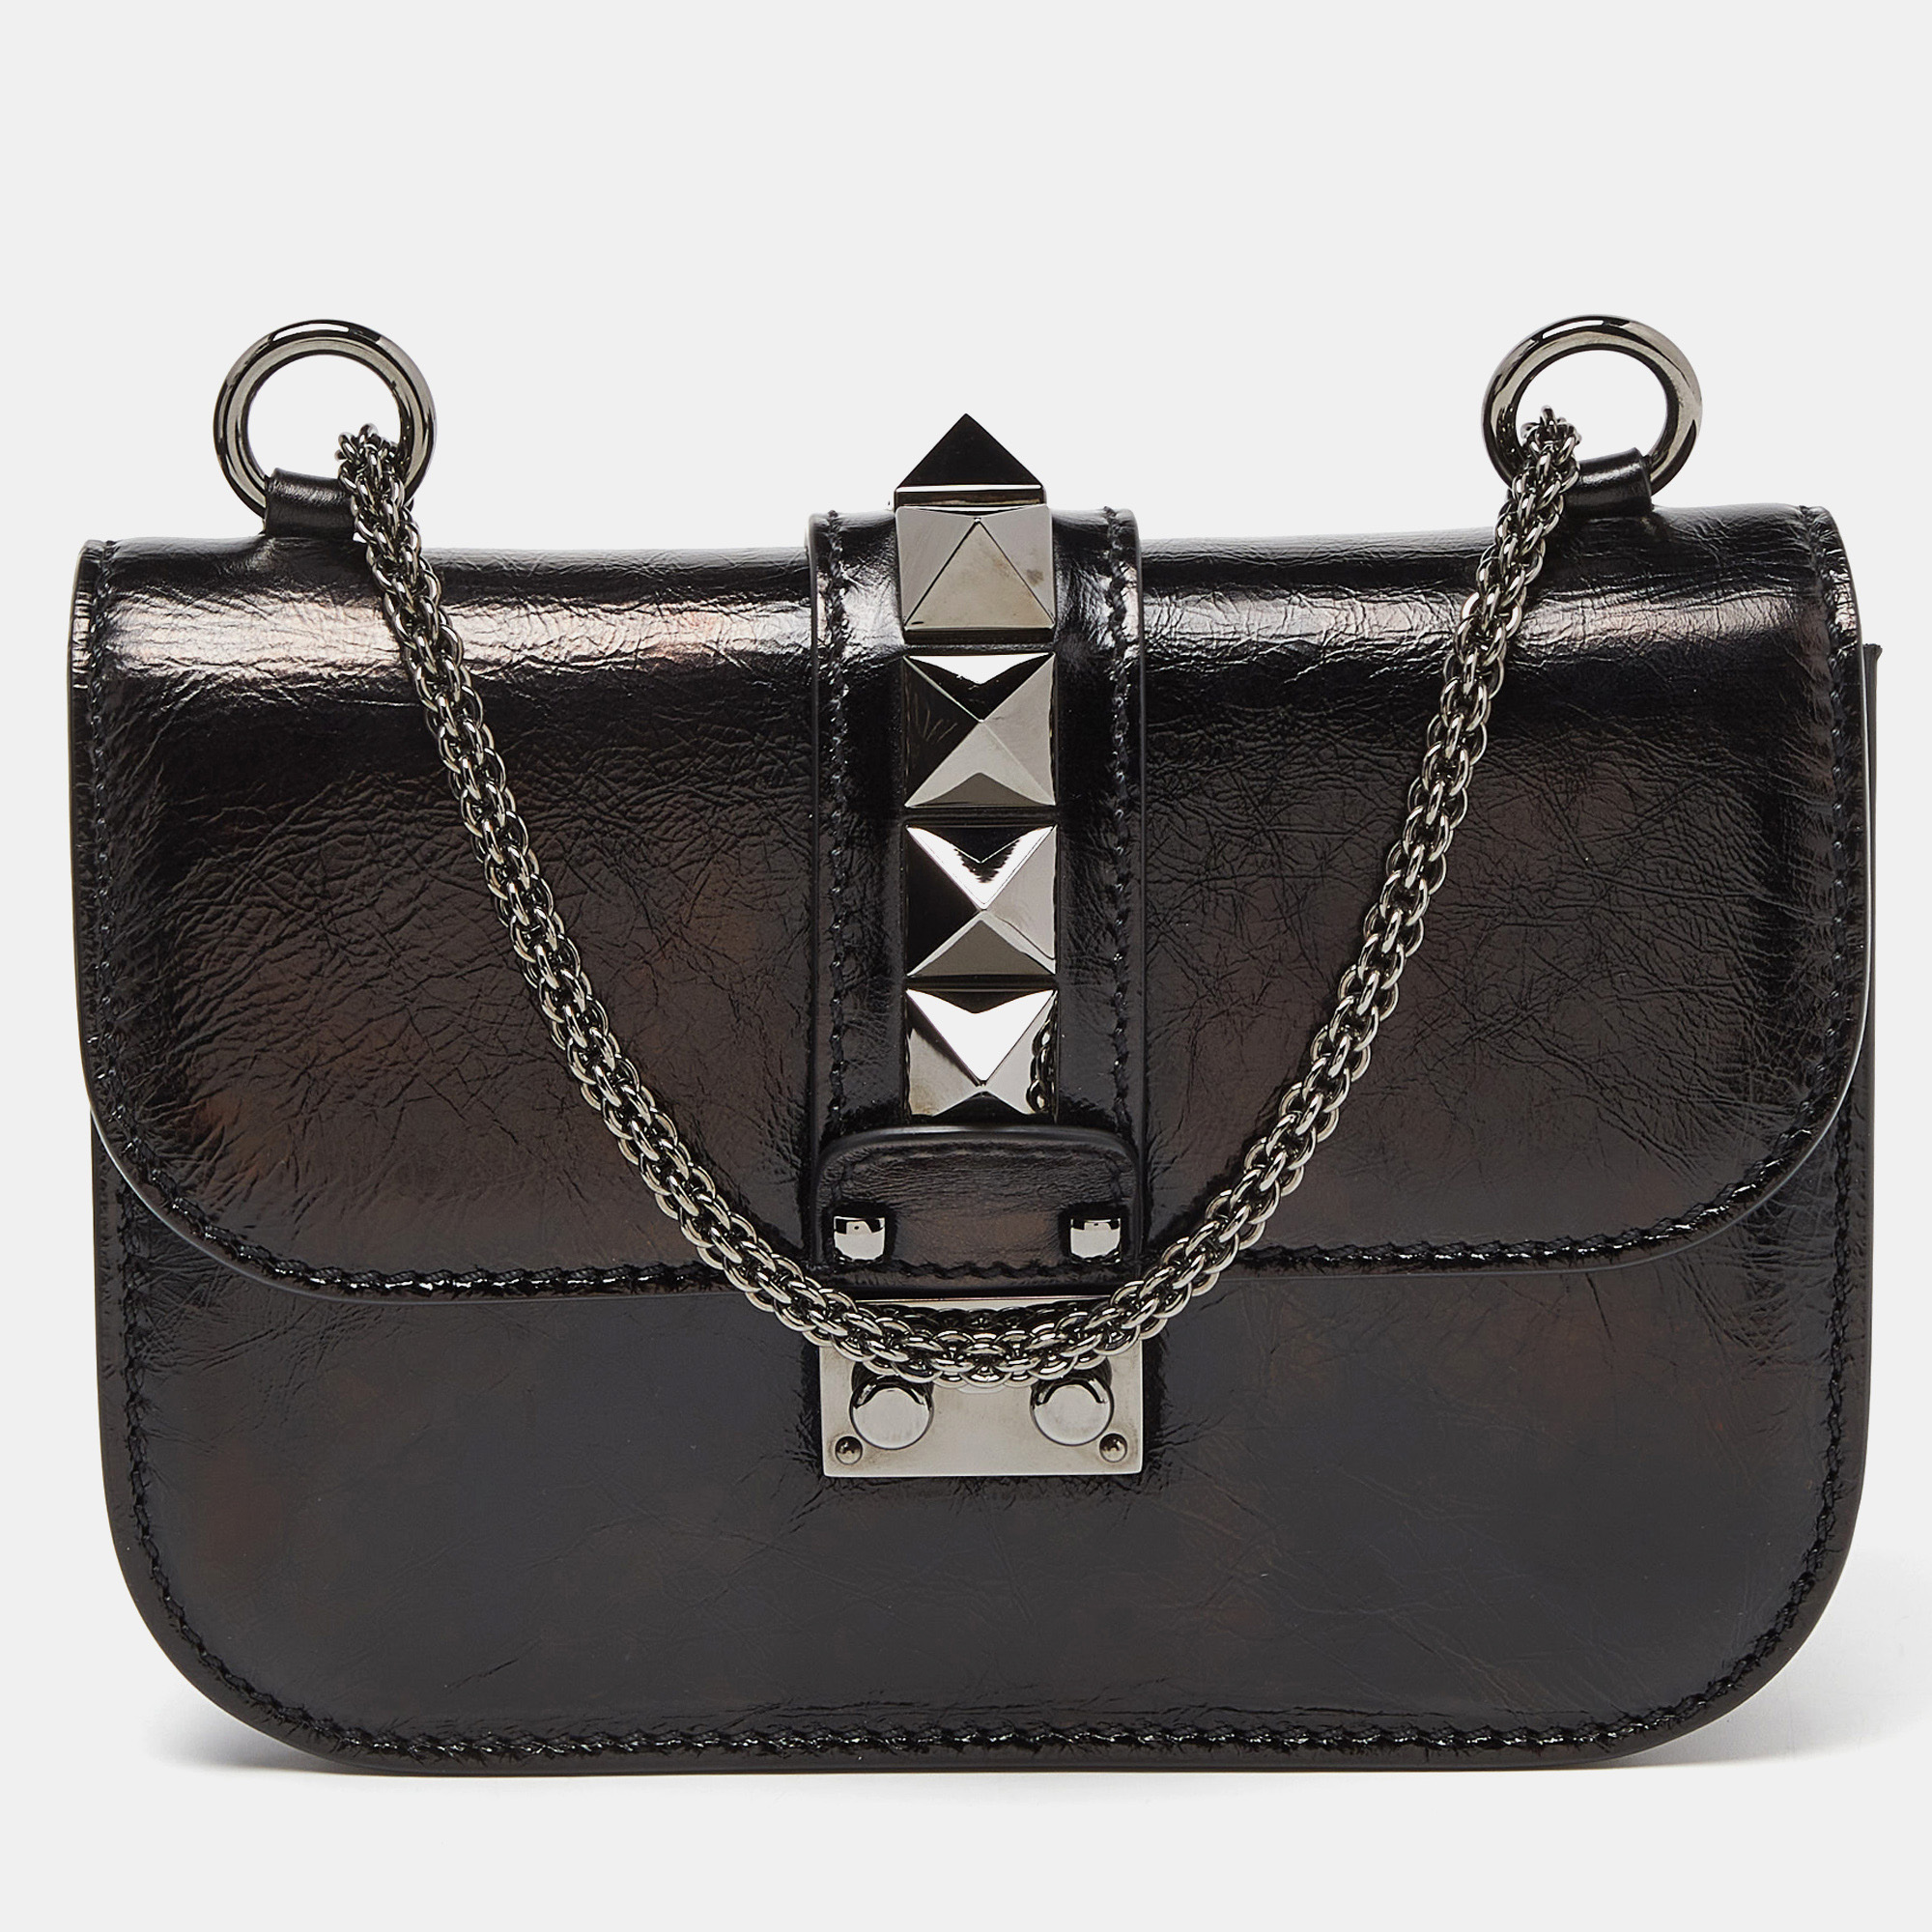 Pre-owned Valentino Garavani Black Leather Small Rockstud Glam Lock Flap Bag